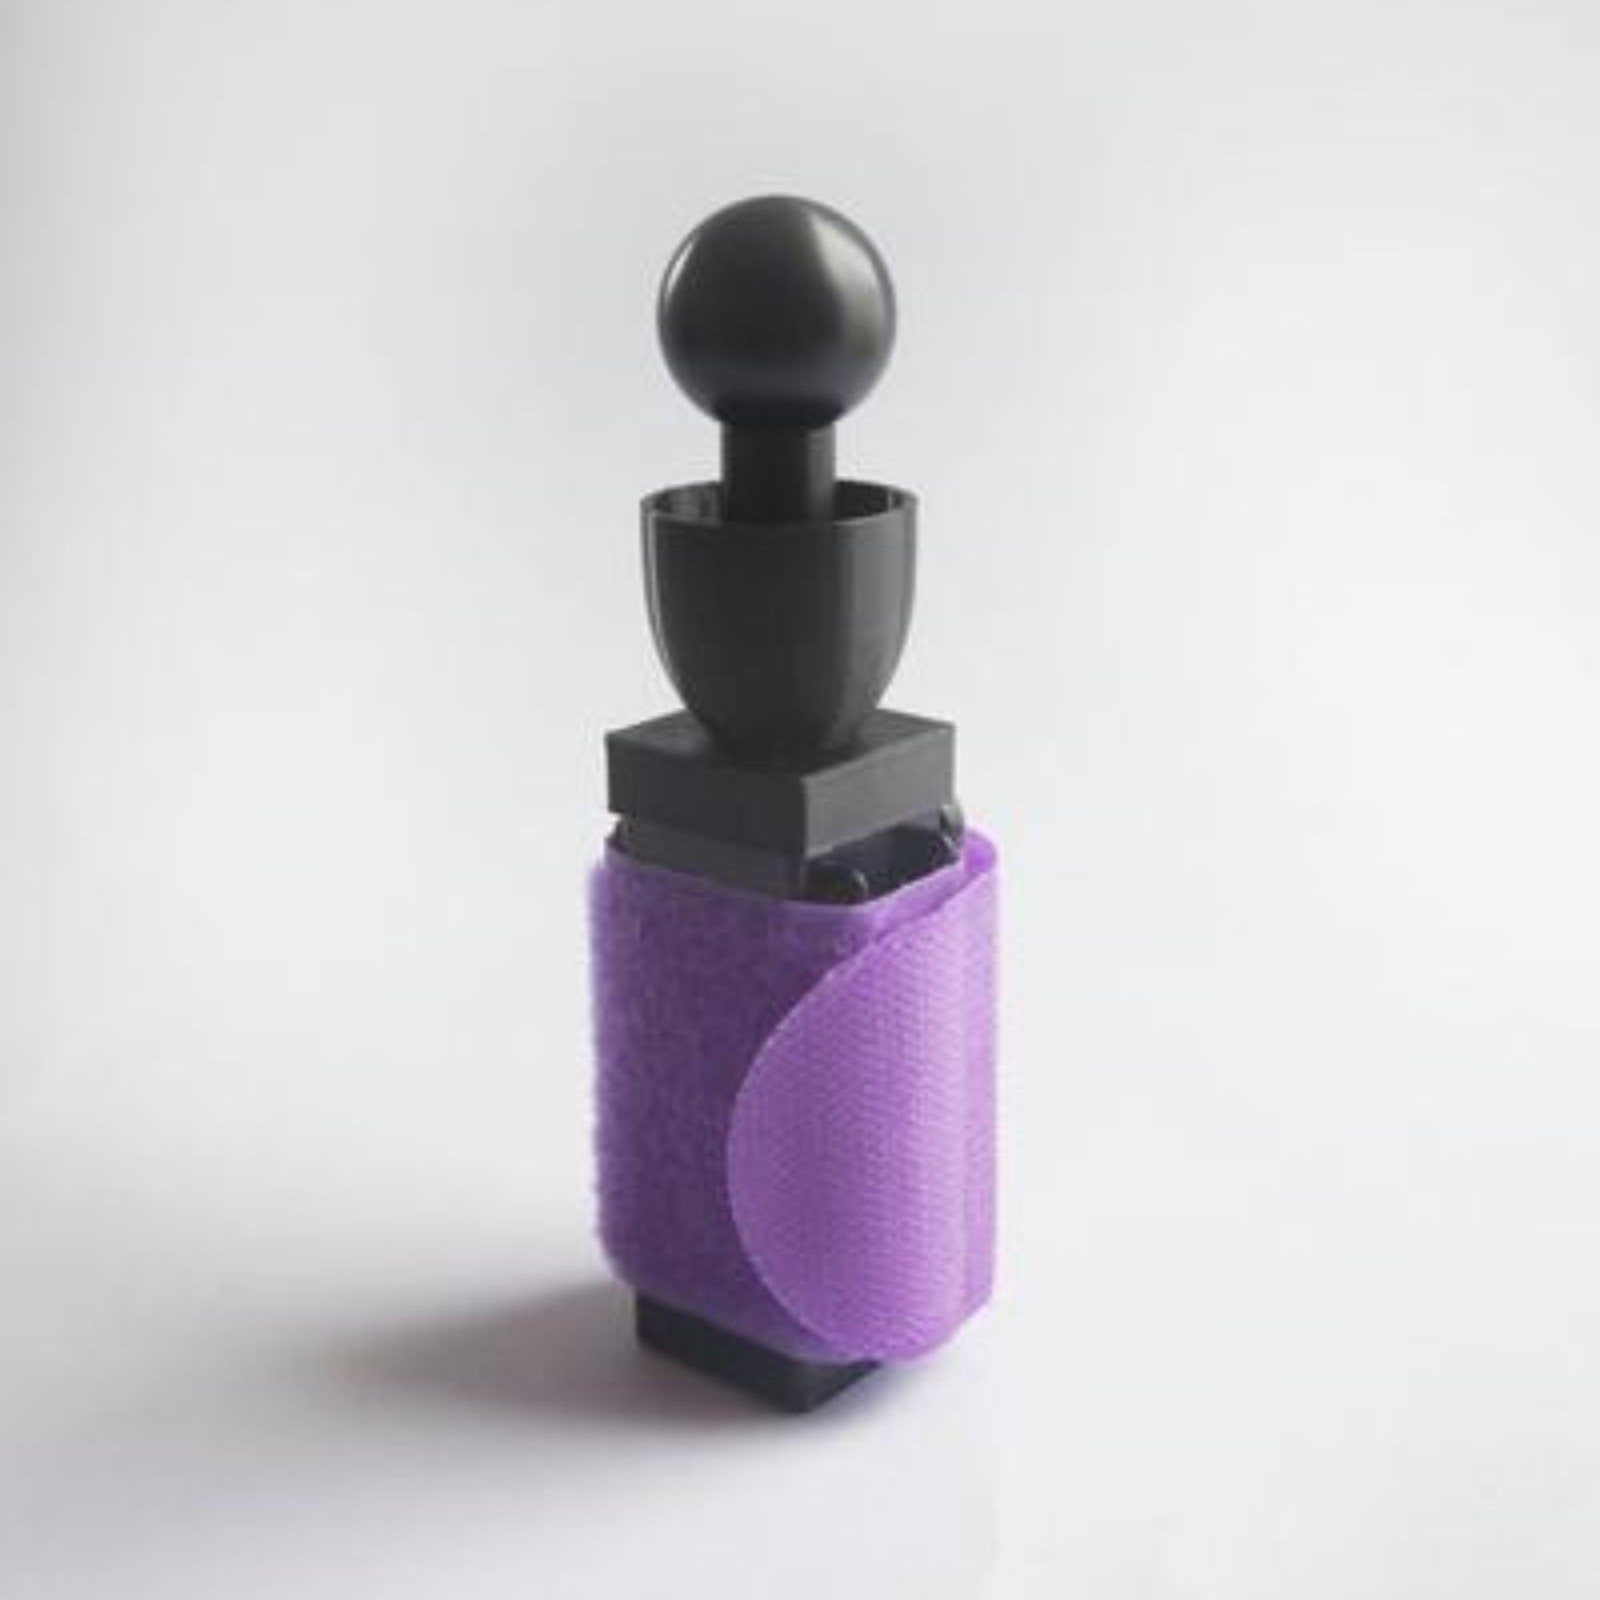 Purple Rose Supply - Cannagar Kit - G2 Small